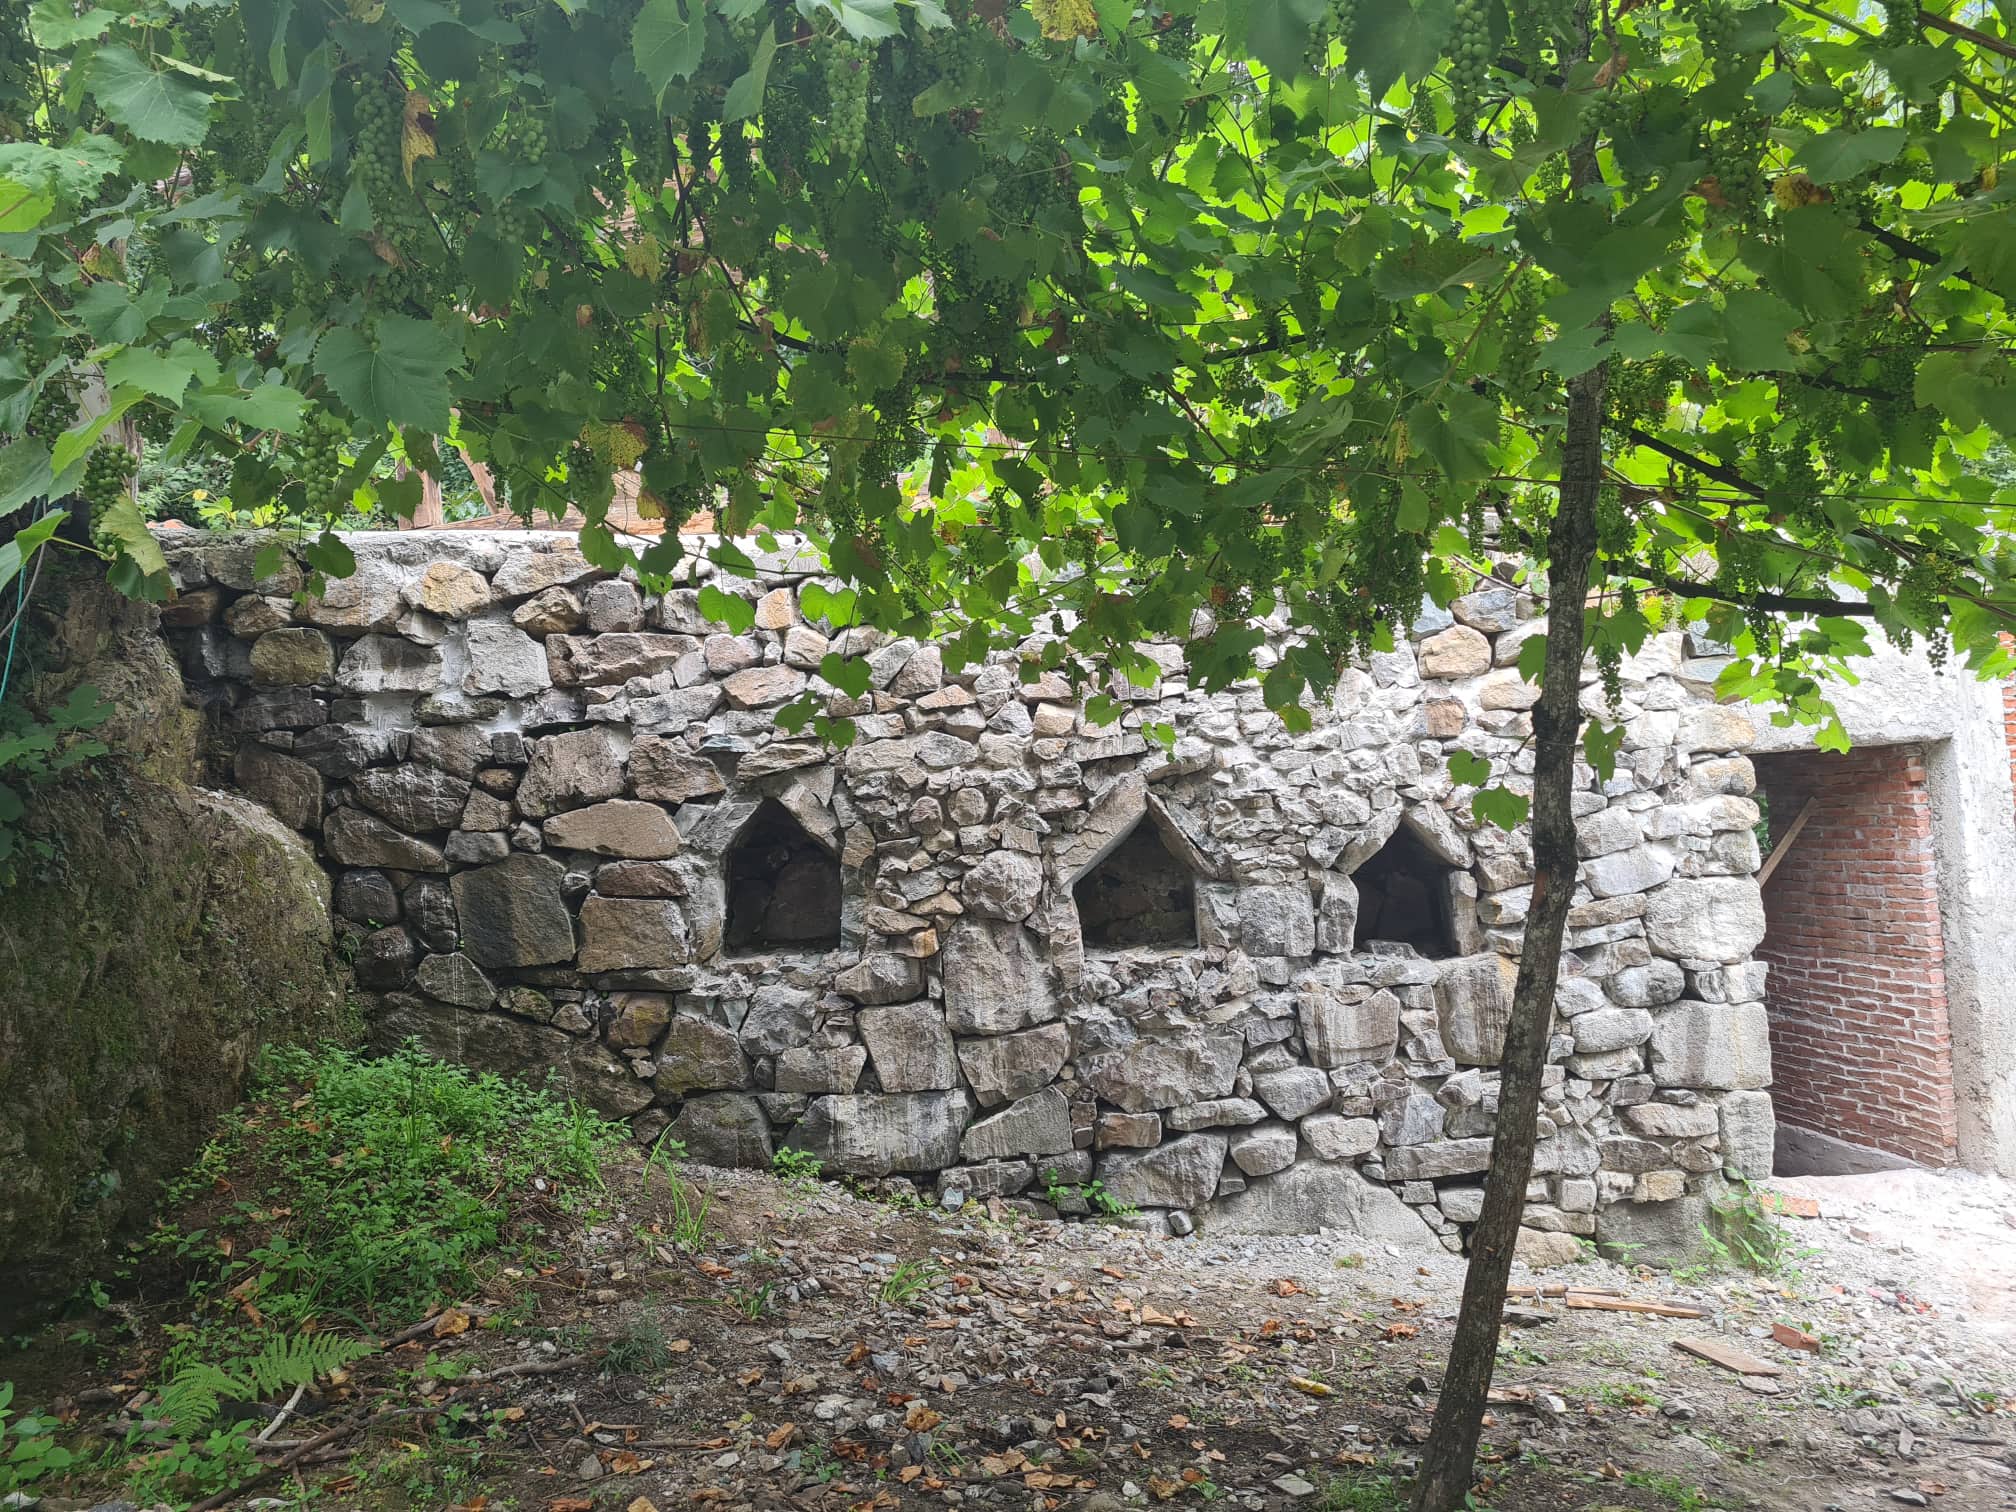  The rehabilitation of Tskhemlara cellar in Chkhutuneti village is underway